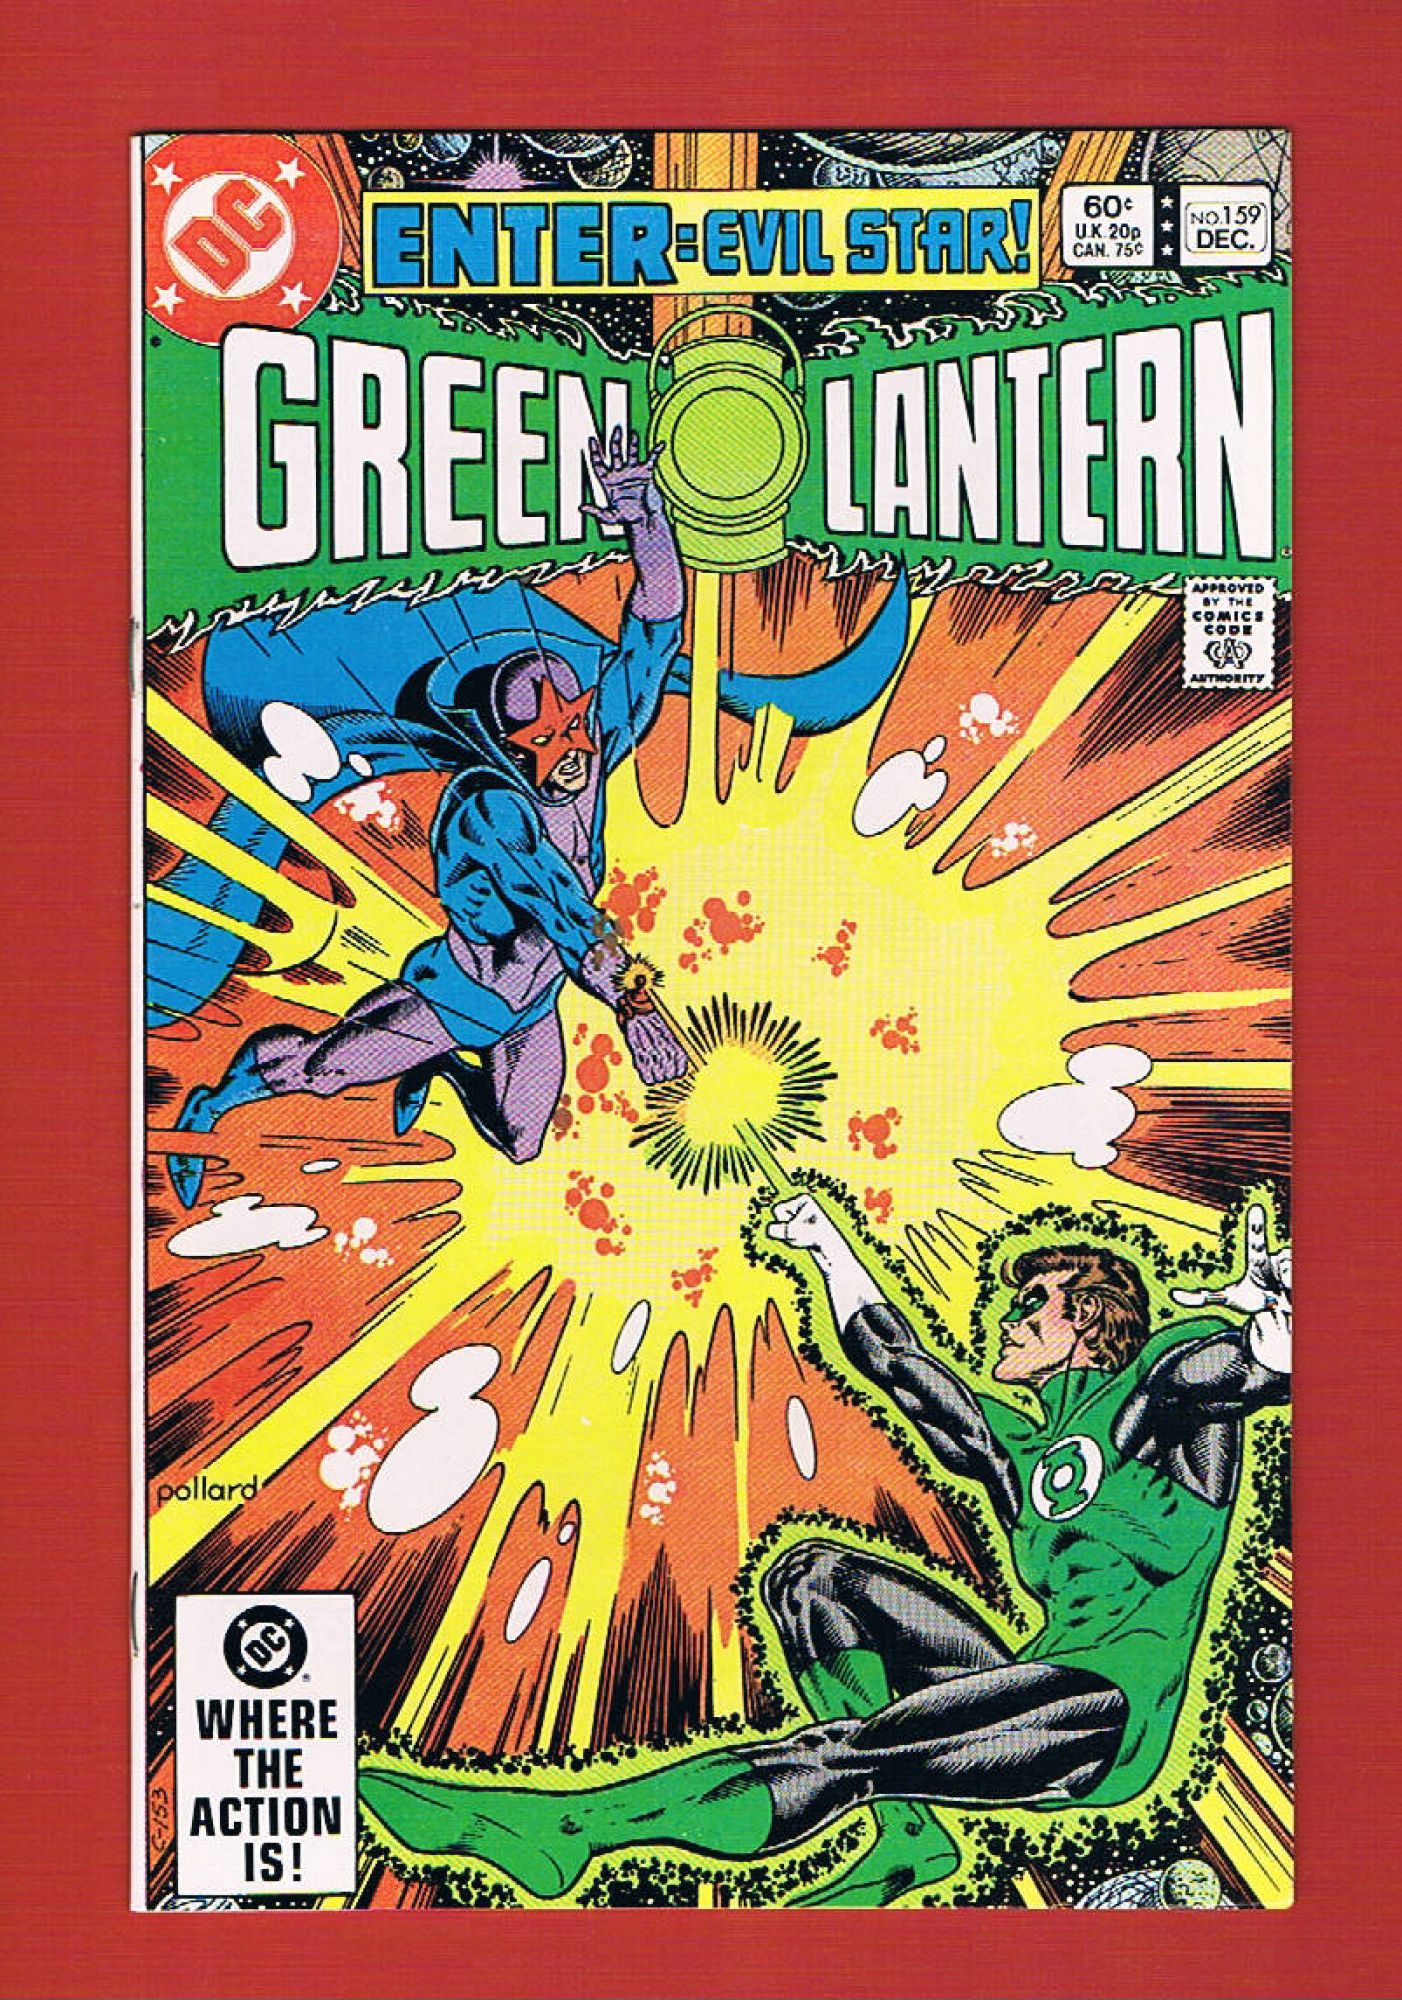 Green Lantern #159, Dec 1982, 9.2 NM-